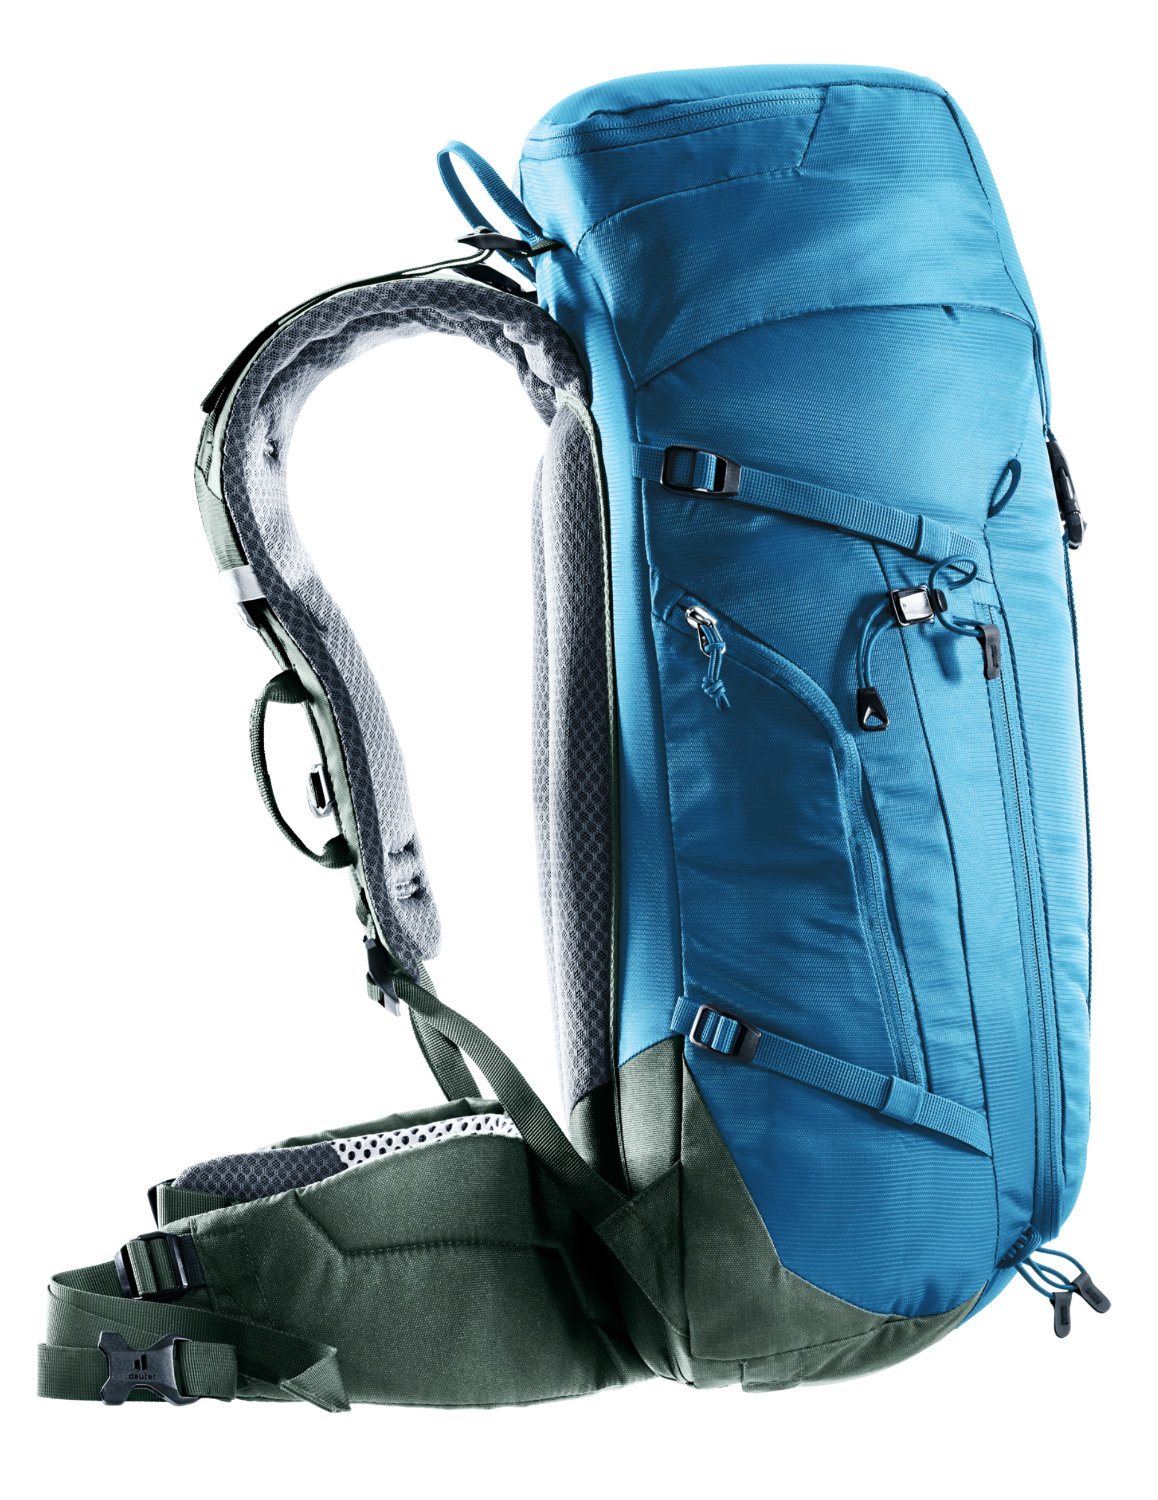 Deuter Trail 30 Men's Hiking Backpack